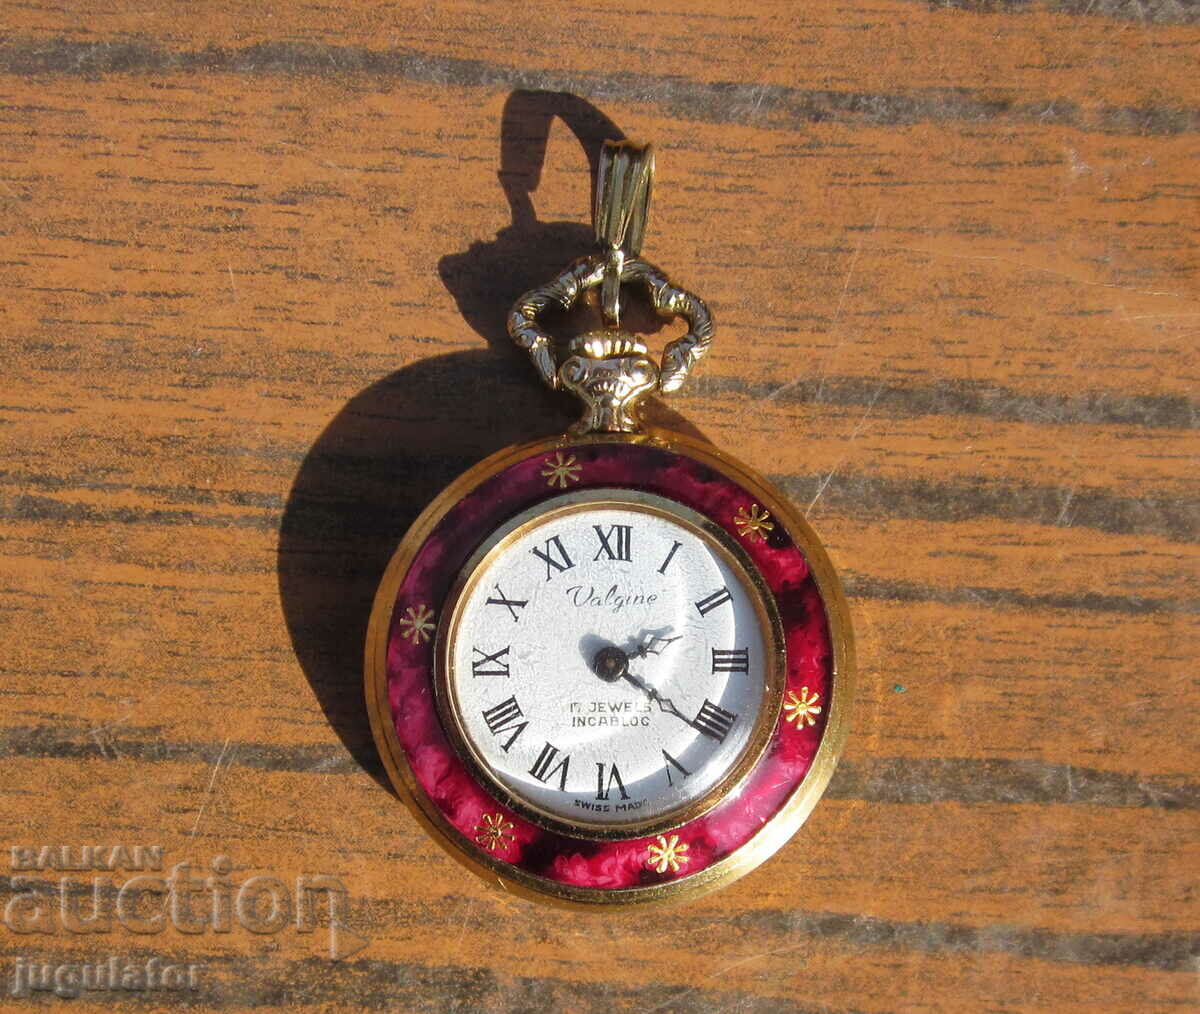 VALGINE old Swiss pocket watch gilded with enamel